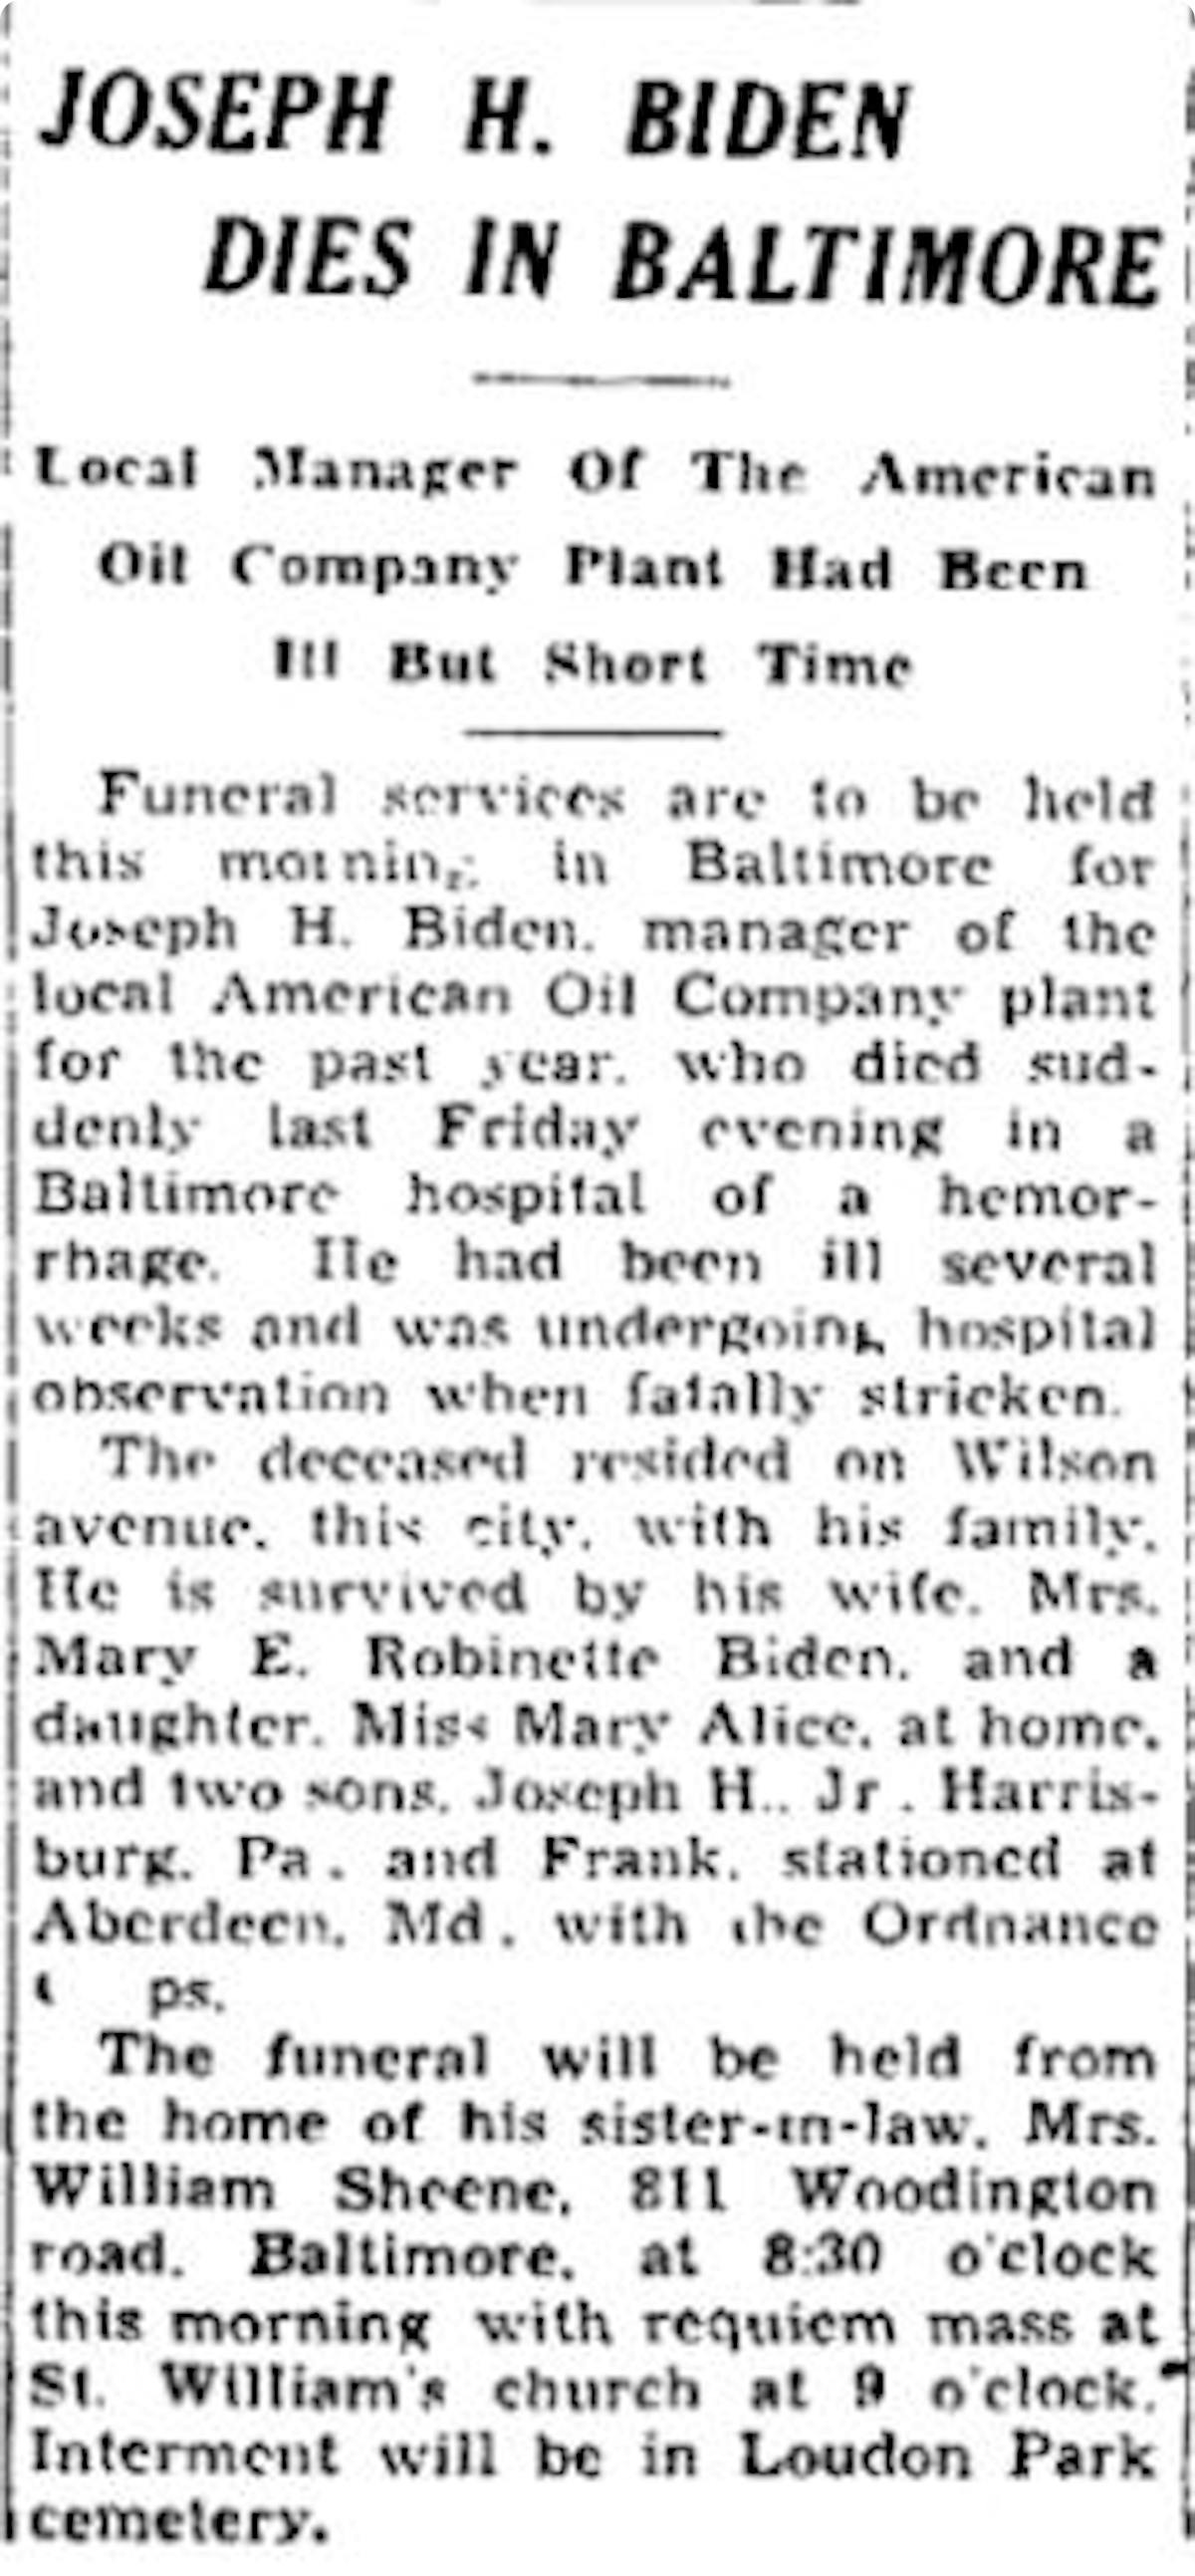 Joe Biden's ancestor's newspaper obituary